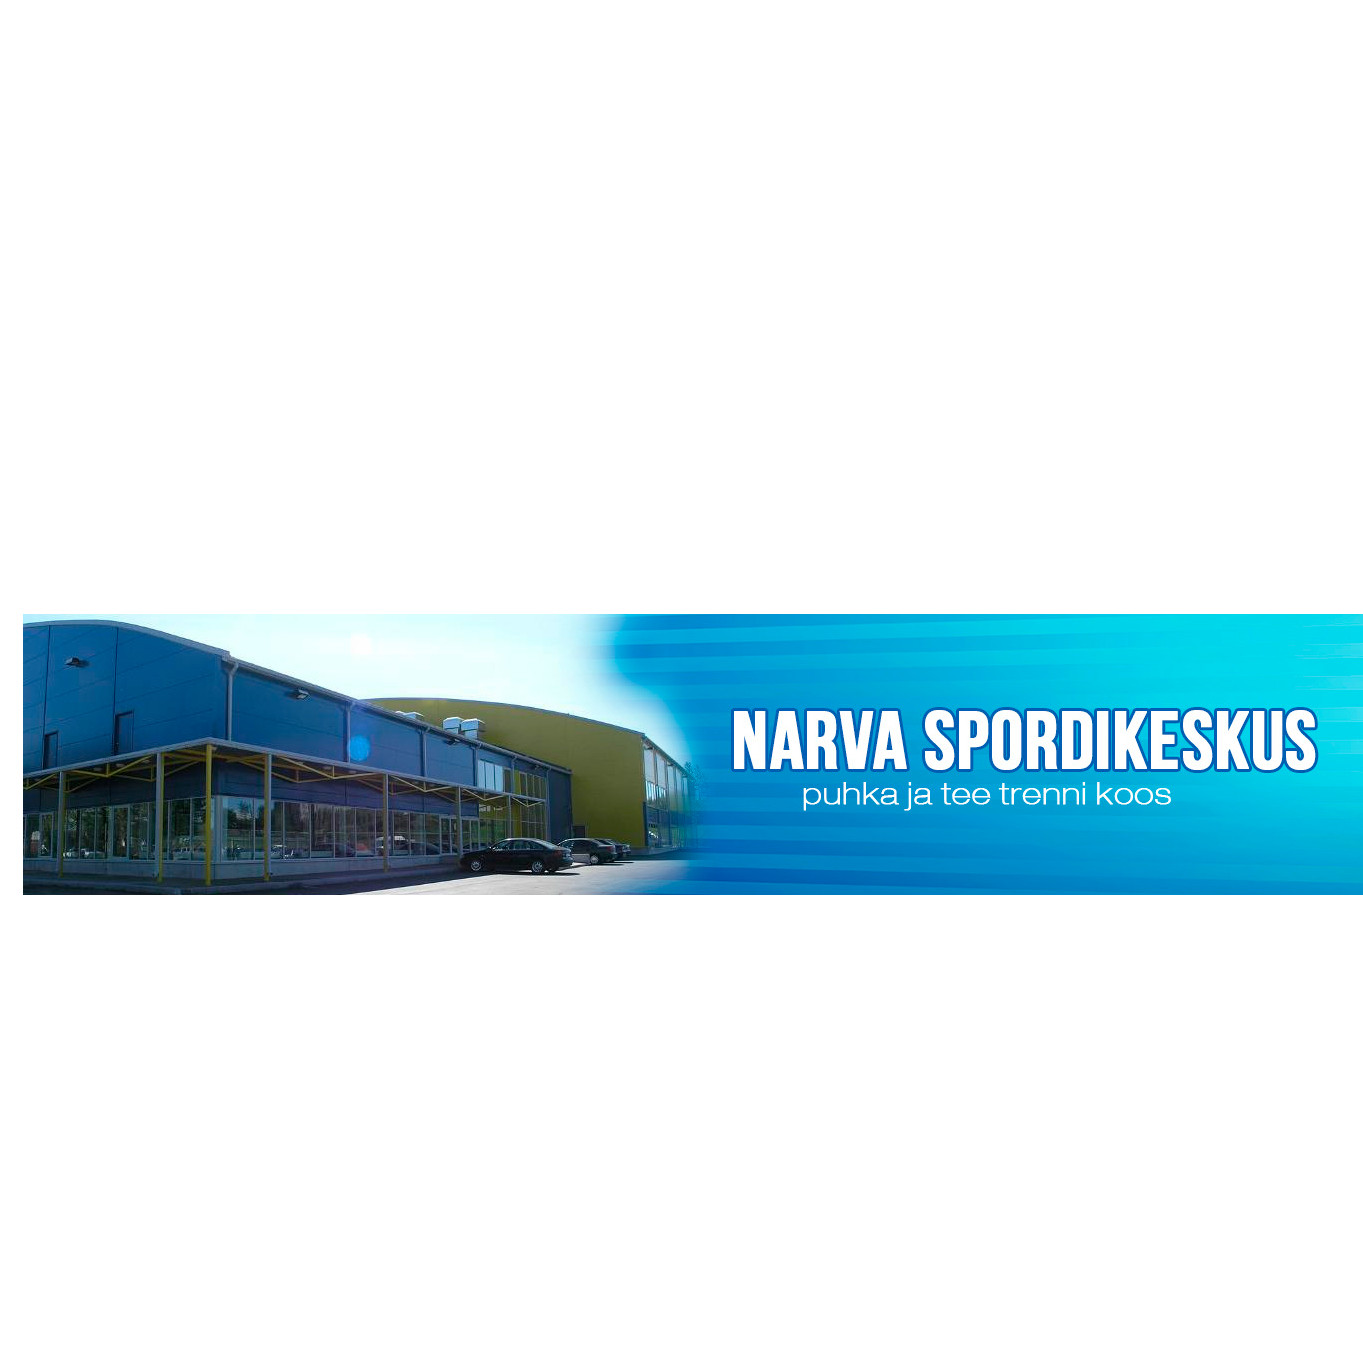 NARVA SPORDIKESKUS logo